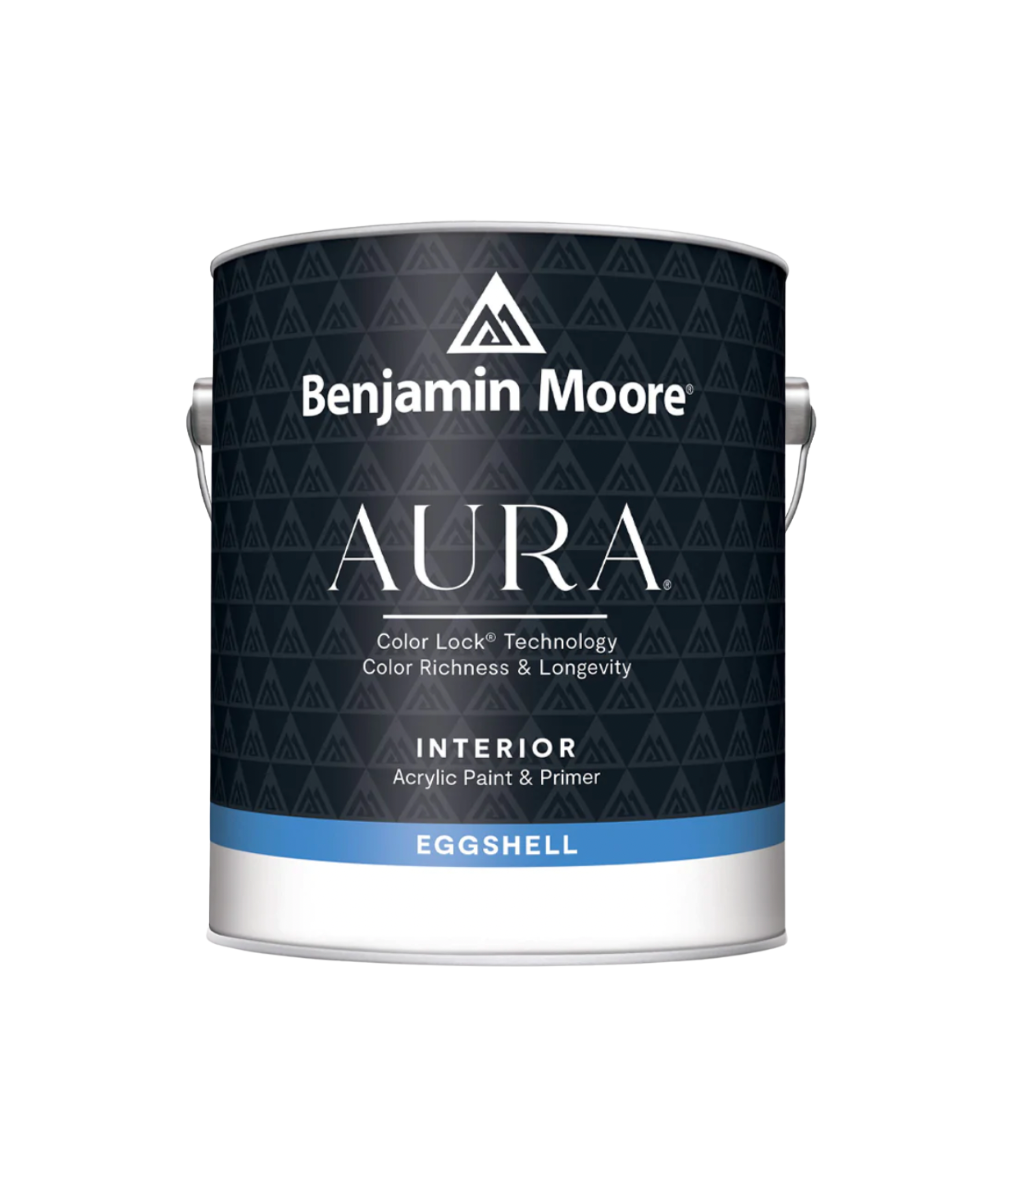 Benjamin Moore Aura Eggshell Interior Paint available at Wallauer Paint & Design.